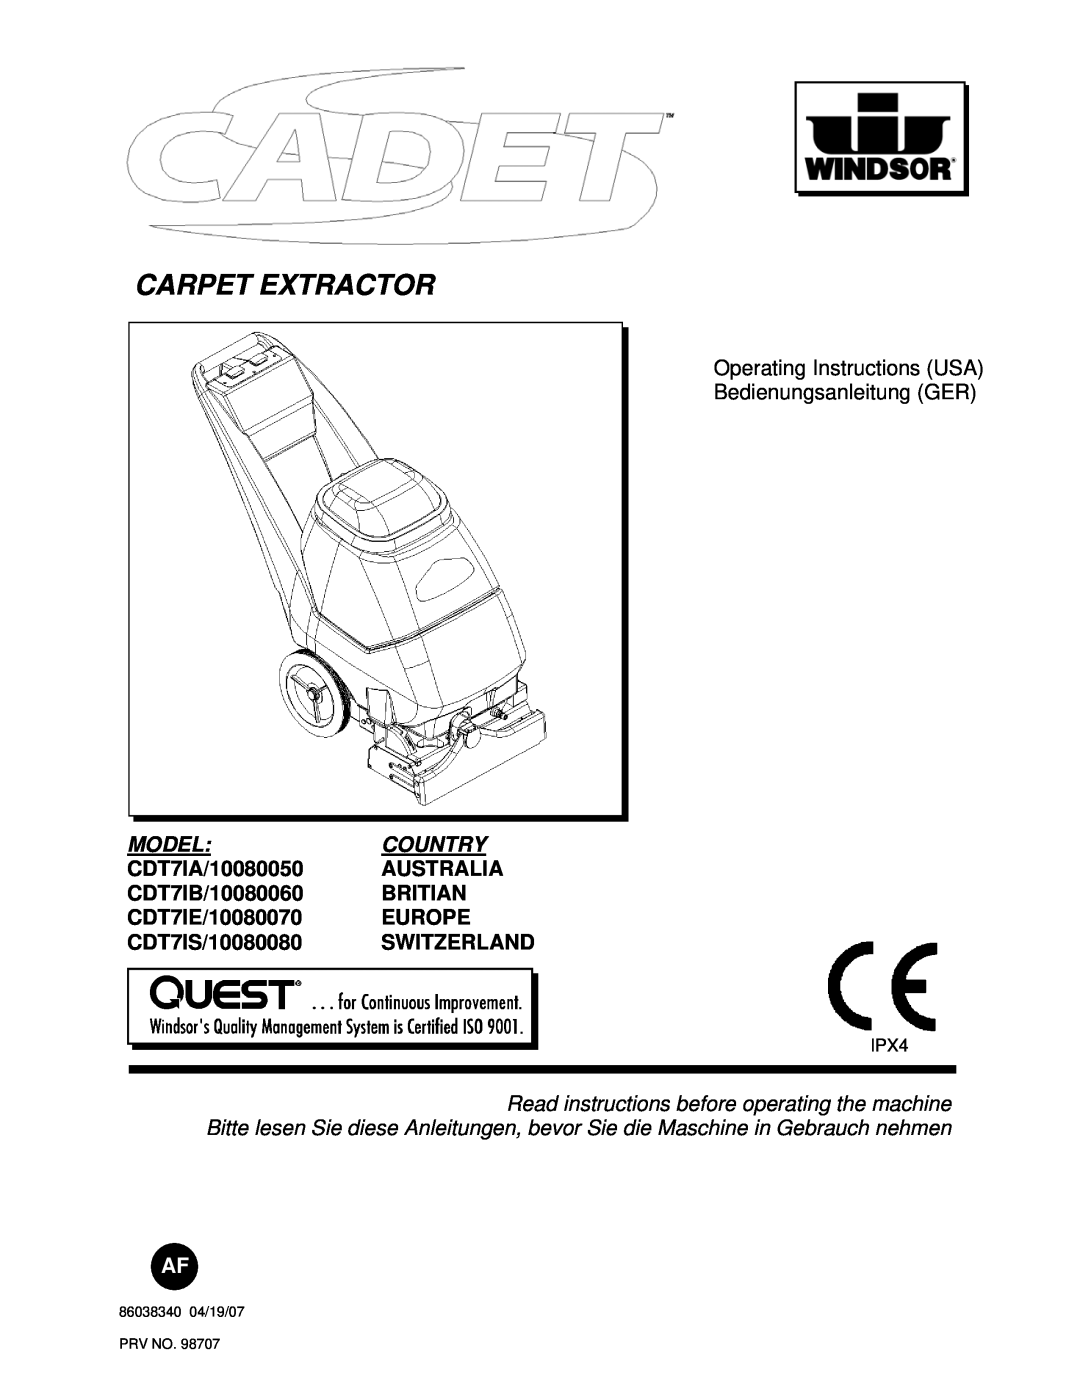 Windsor CDT7IE/10080070 manual Carpet Extractor, Model Country, CDT7IA/10080050 AUSTRALIA CDT7IB/10080060 BRITIAN 